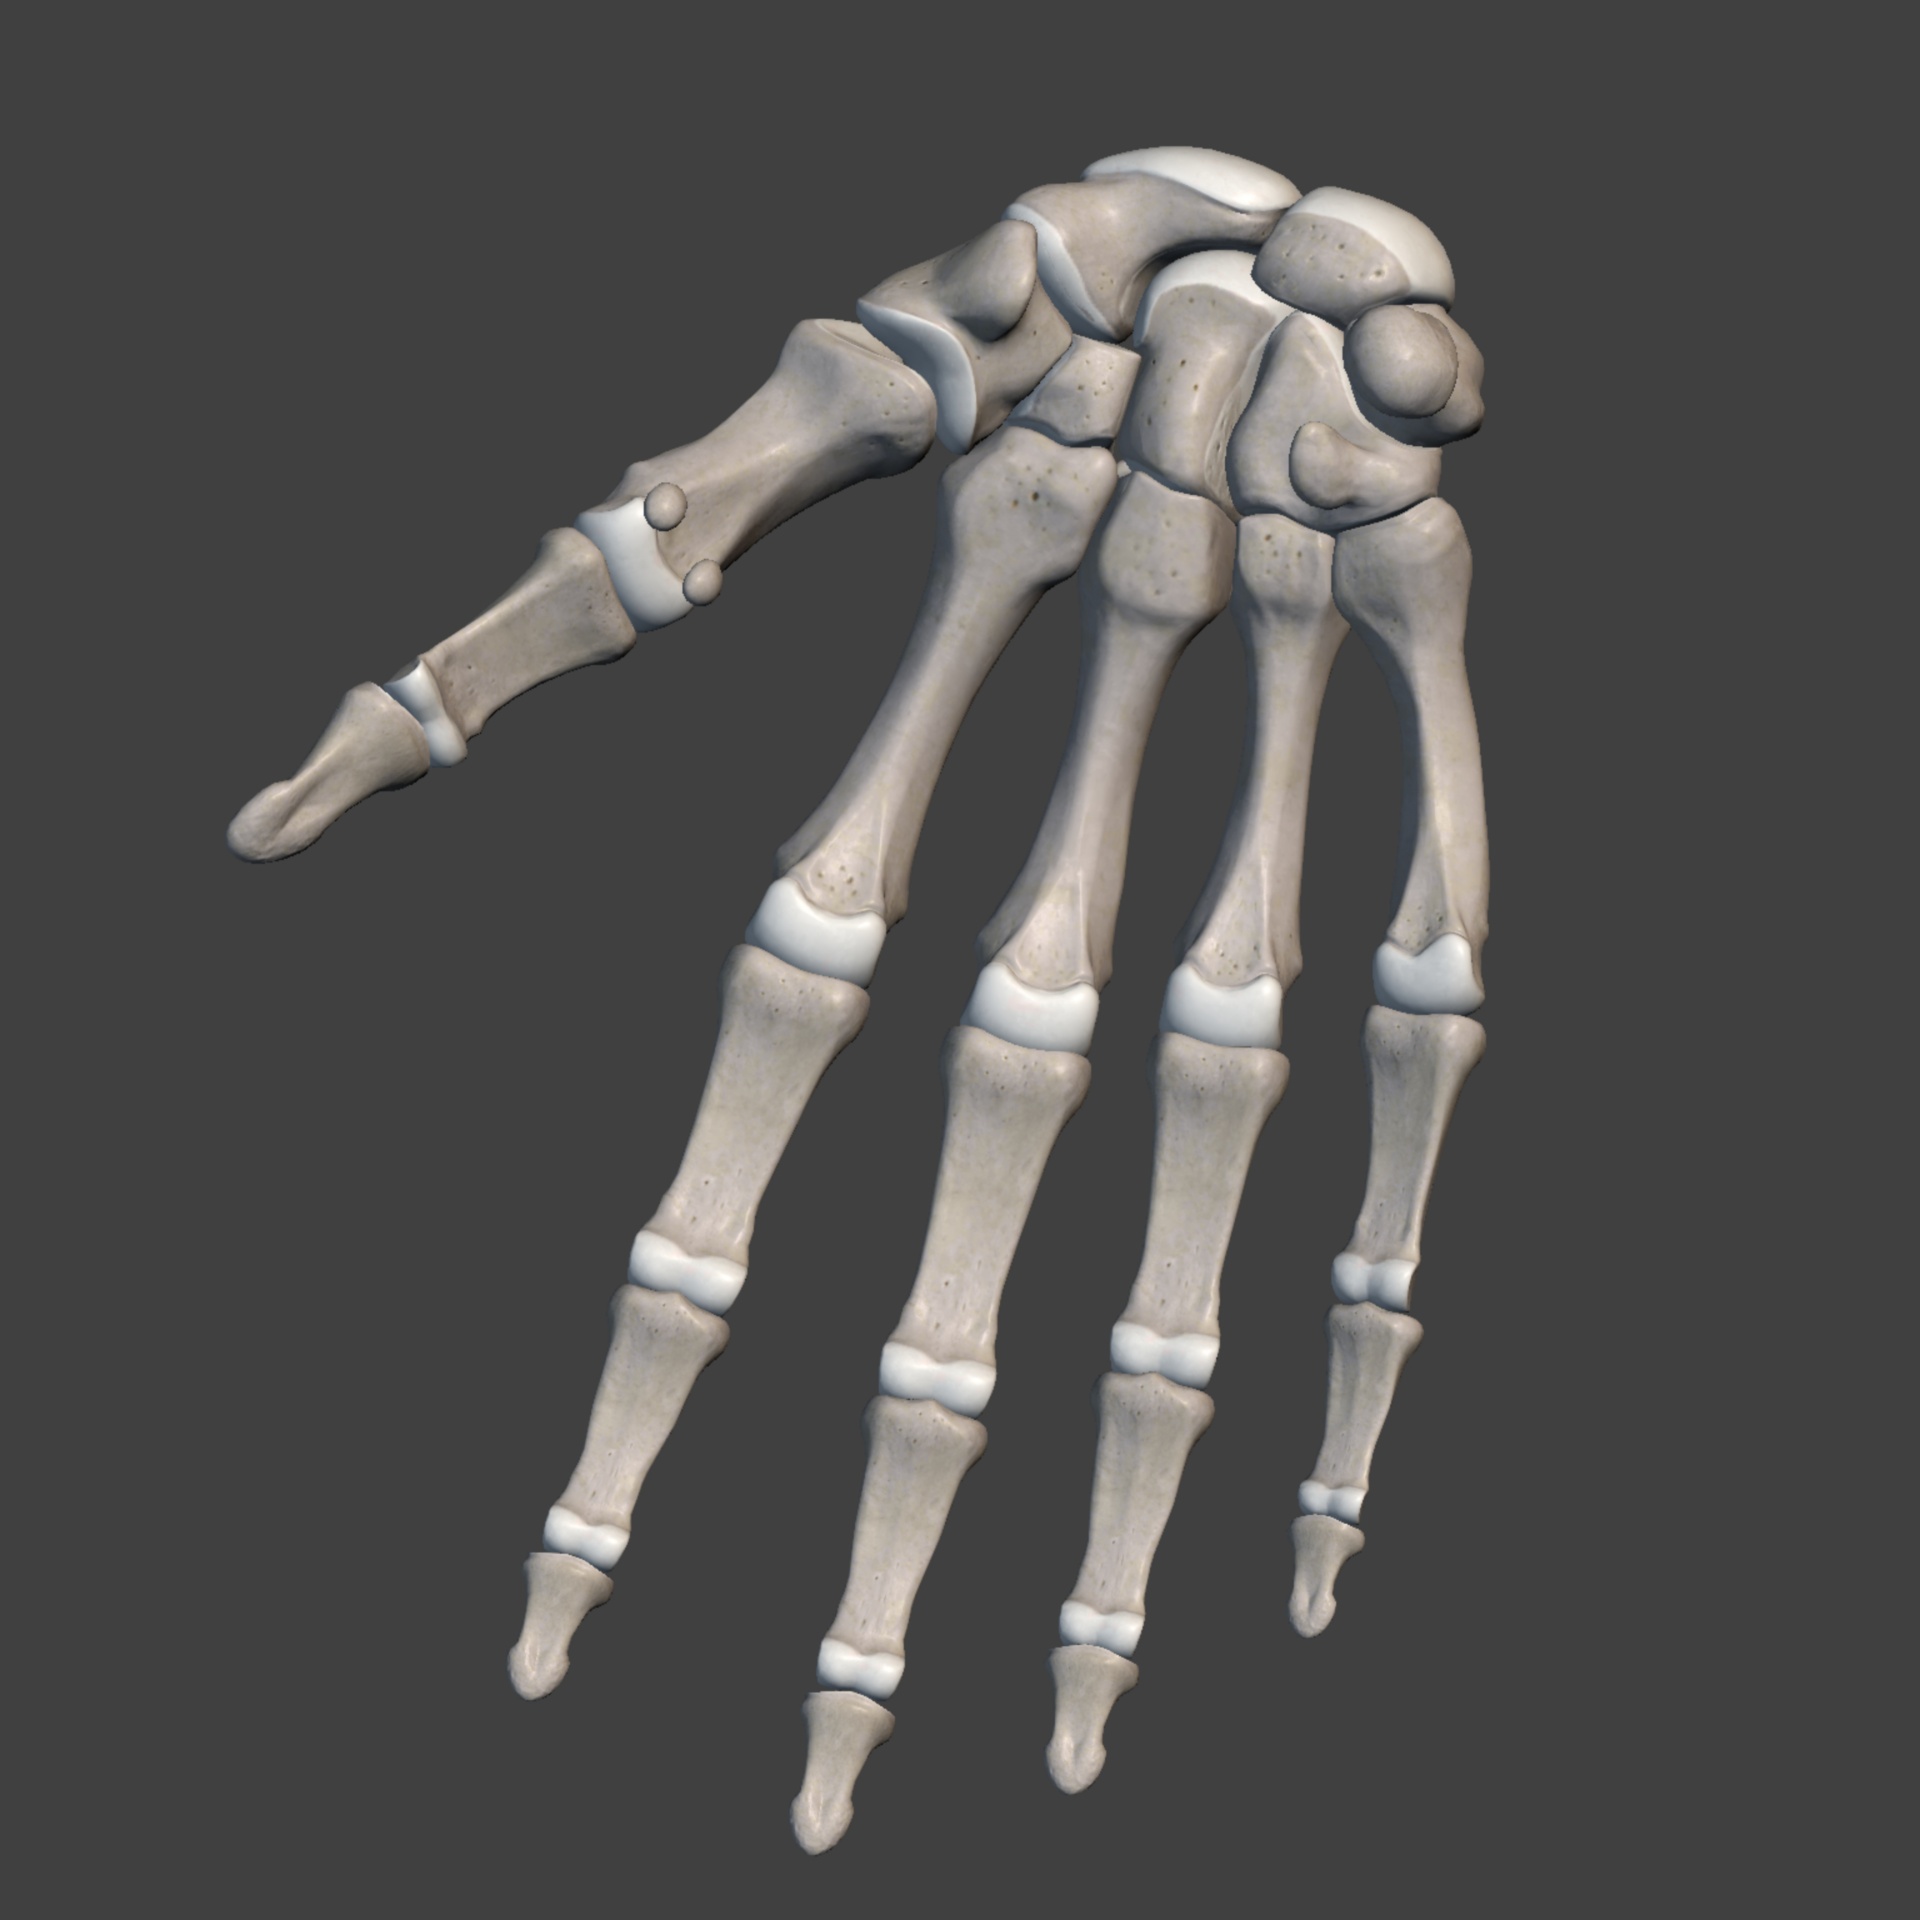 Hand bone. Скелет кисти. Скелет руки. Скелет руки человека. Анатомия кисти.